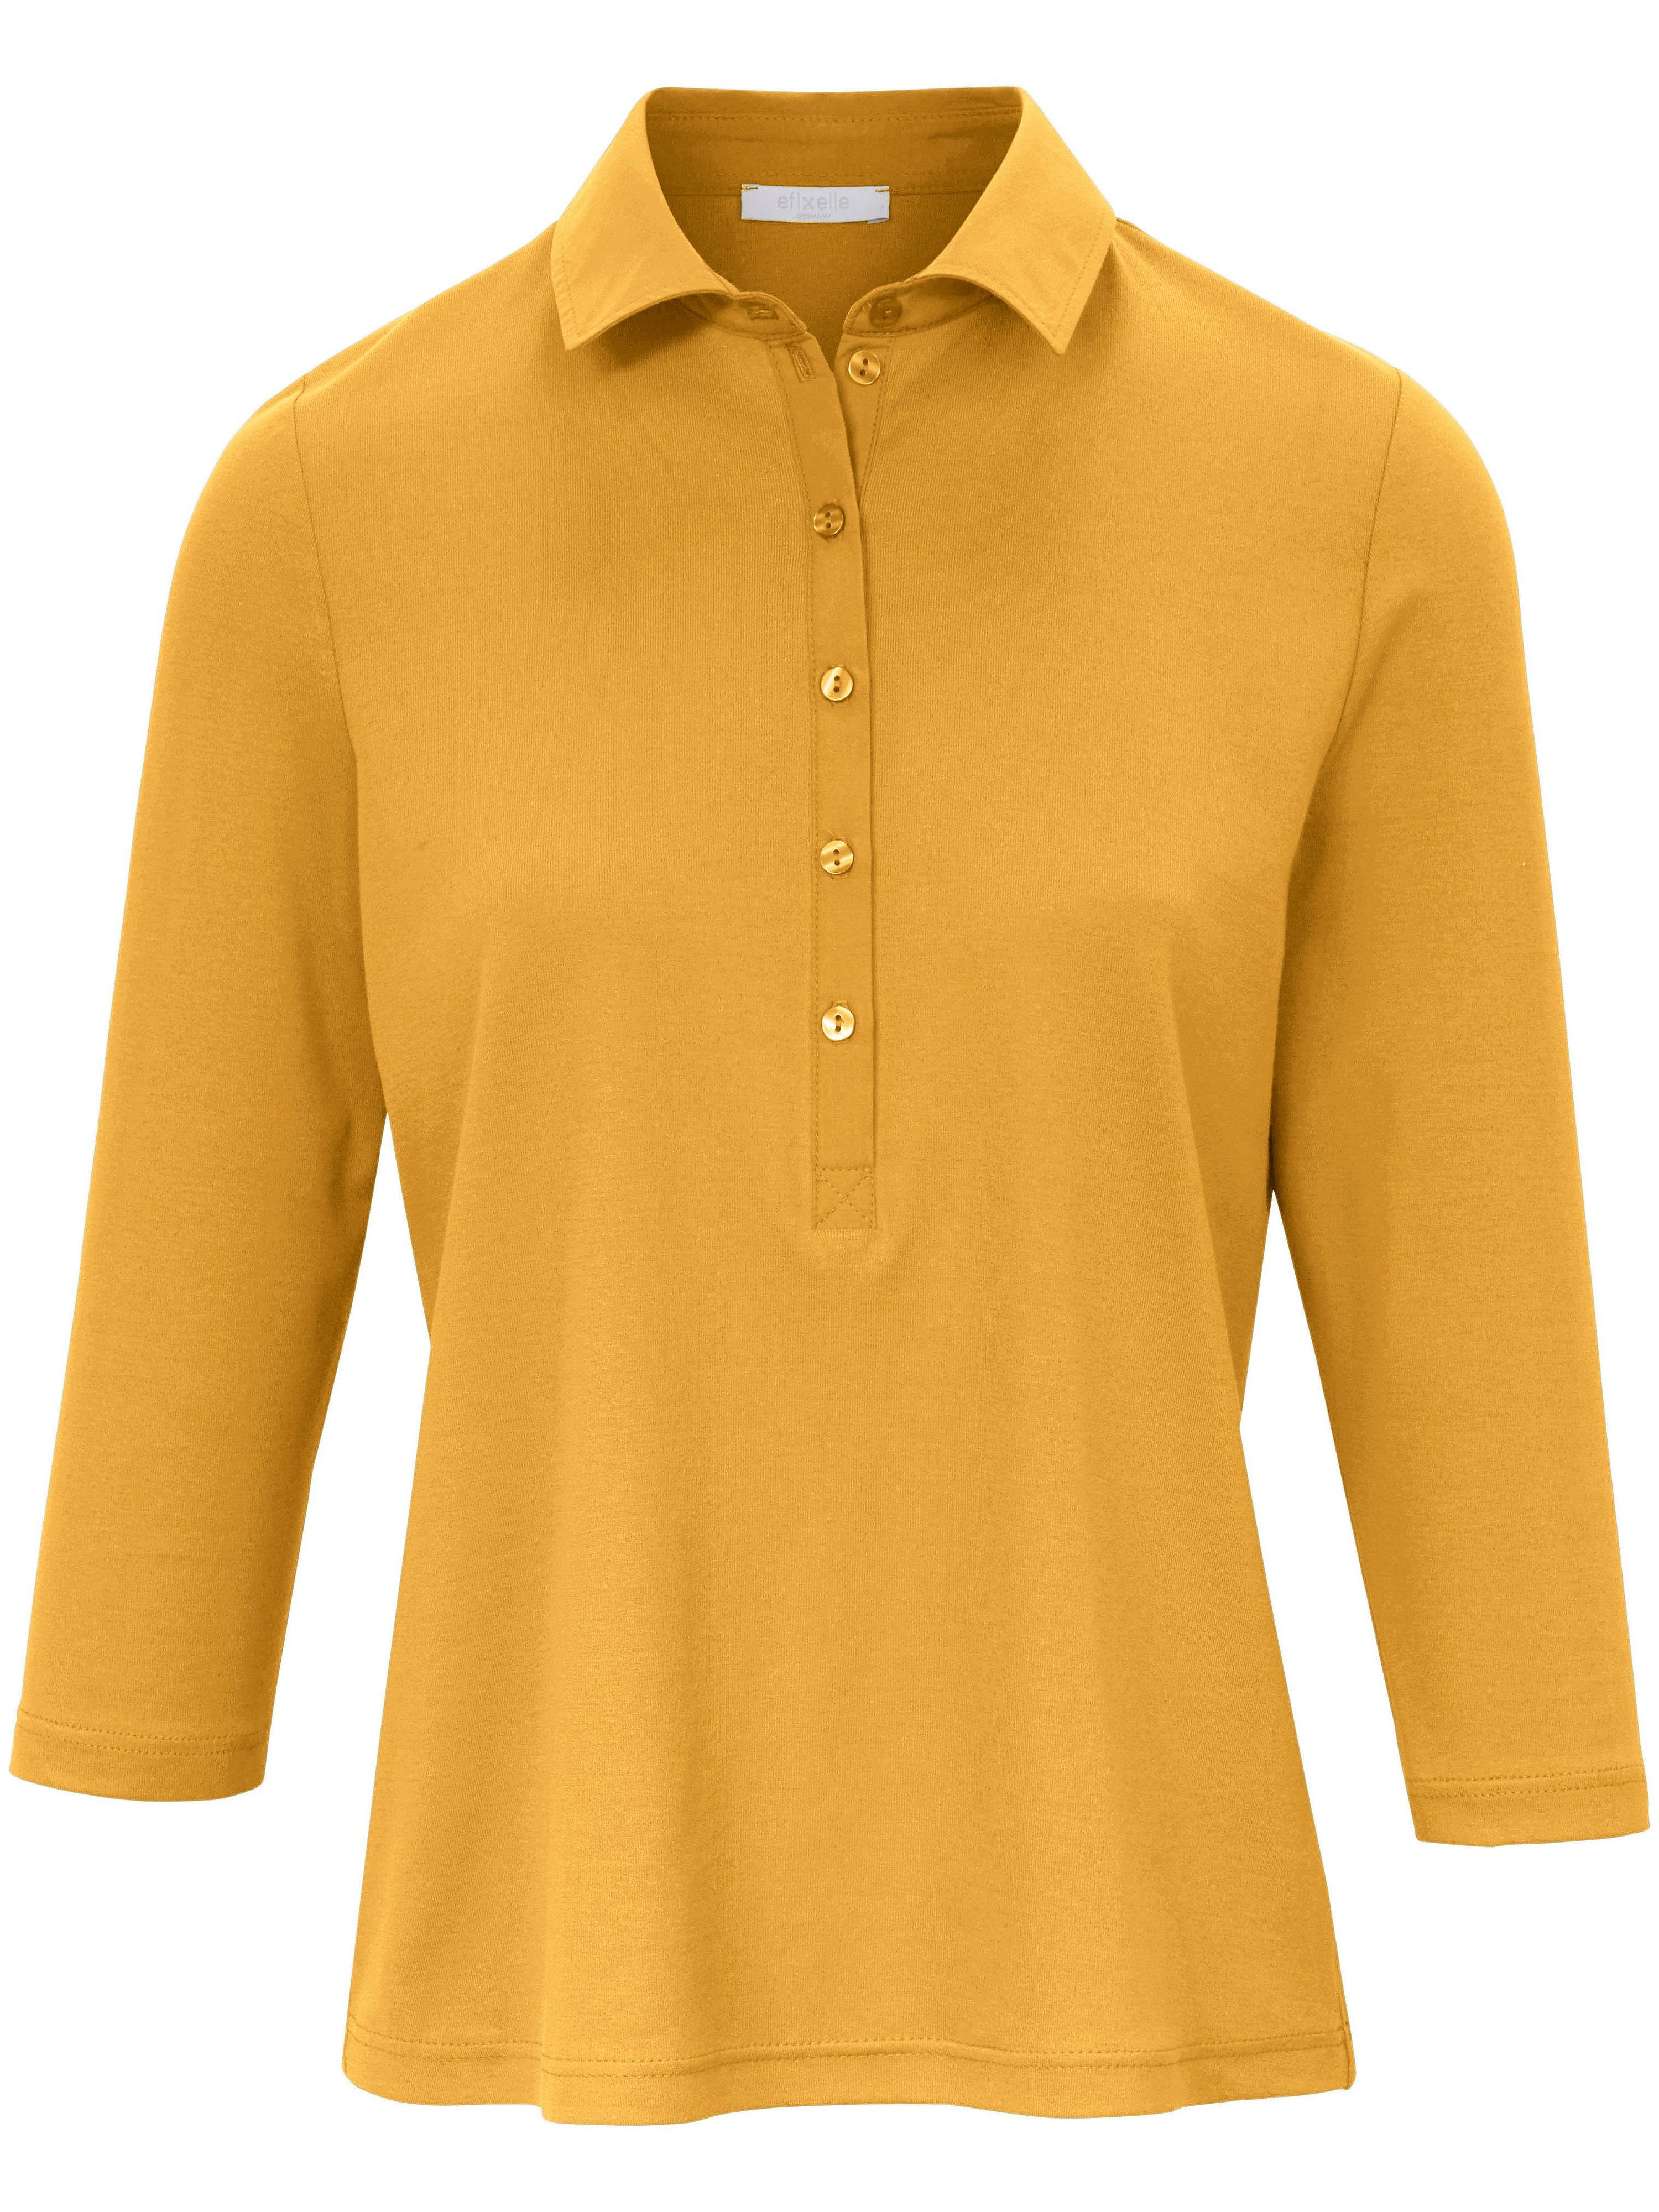 Poloshirt 100% katoen 3/4-mouwen Van Efixelle geel